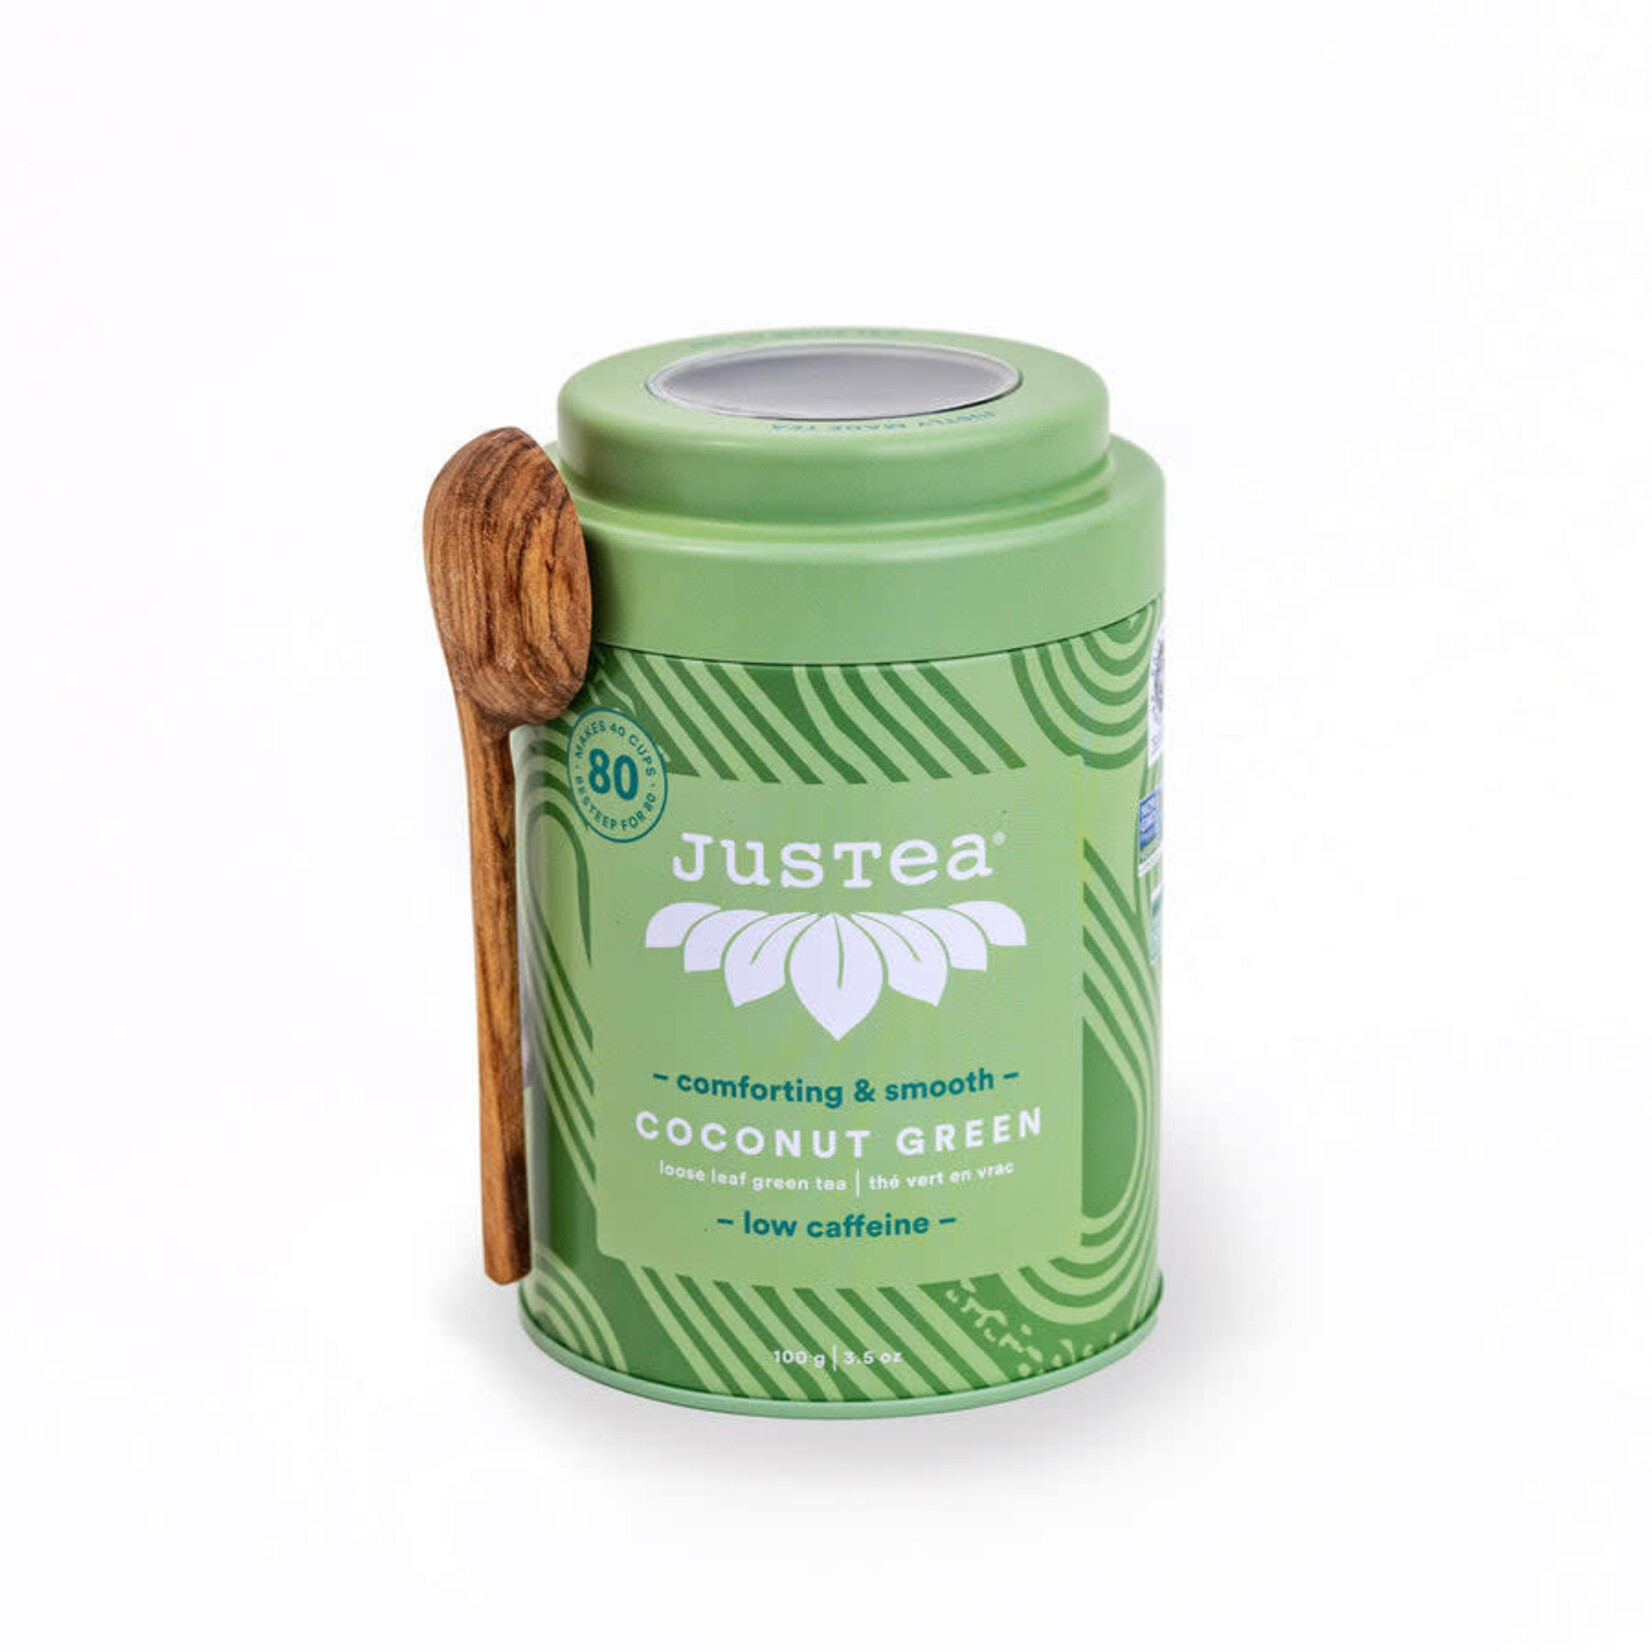 JusTea Justea Coconut Green Loose Tea Tin with Spoon